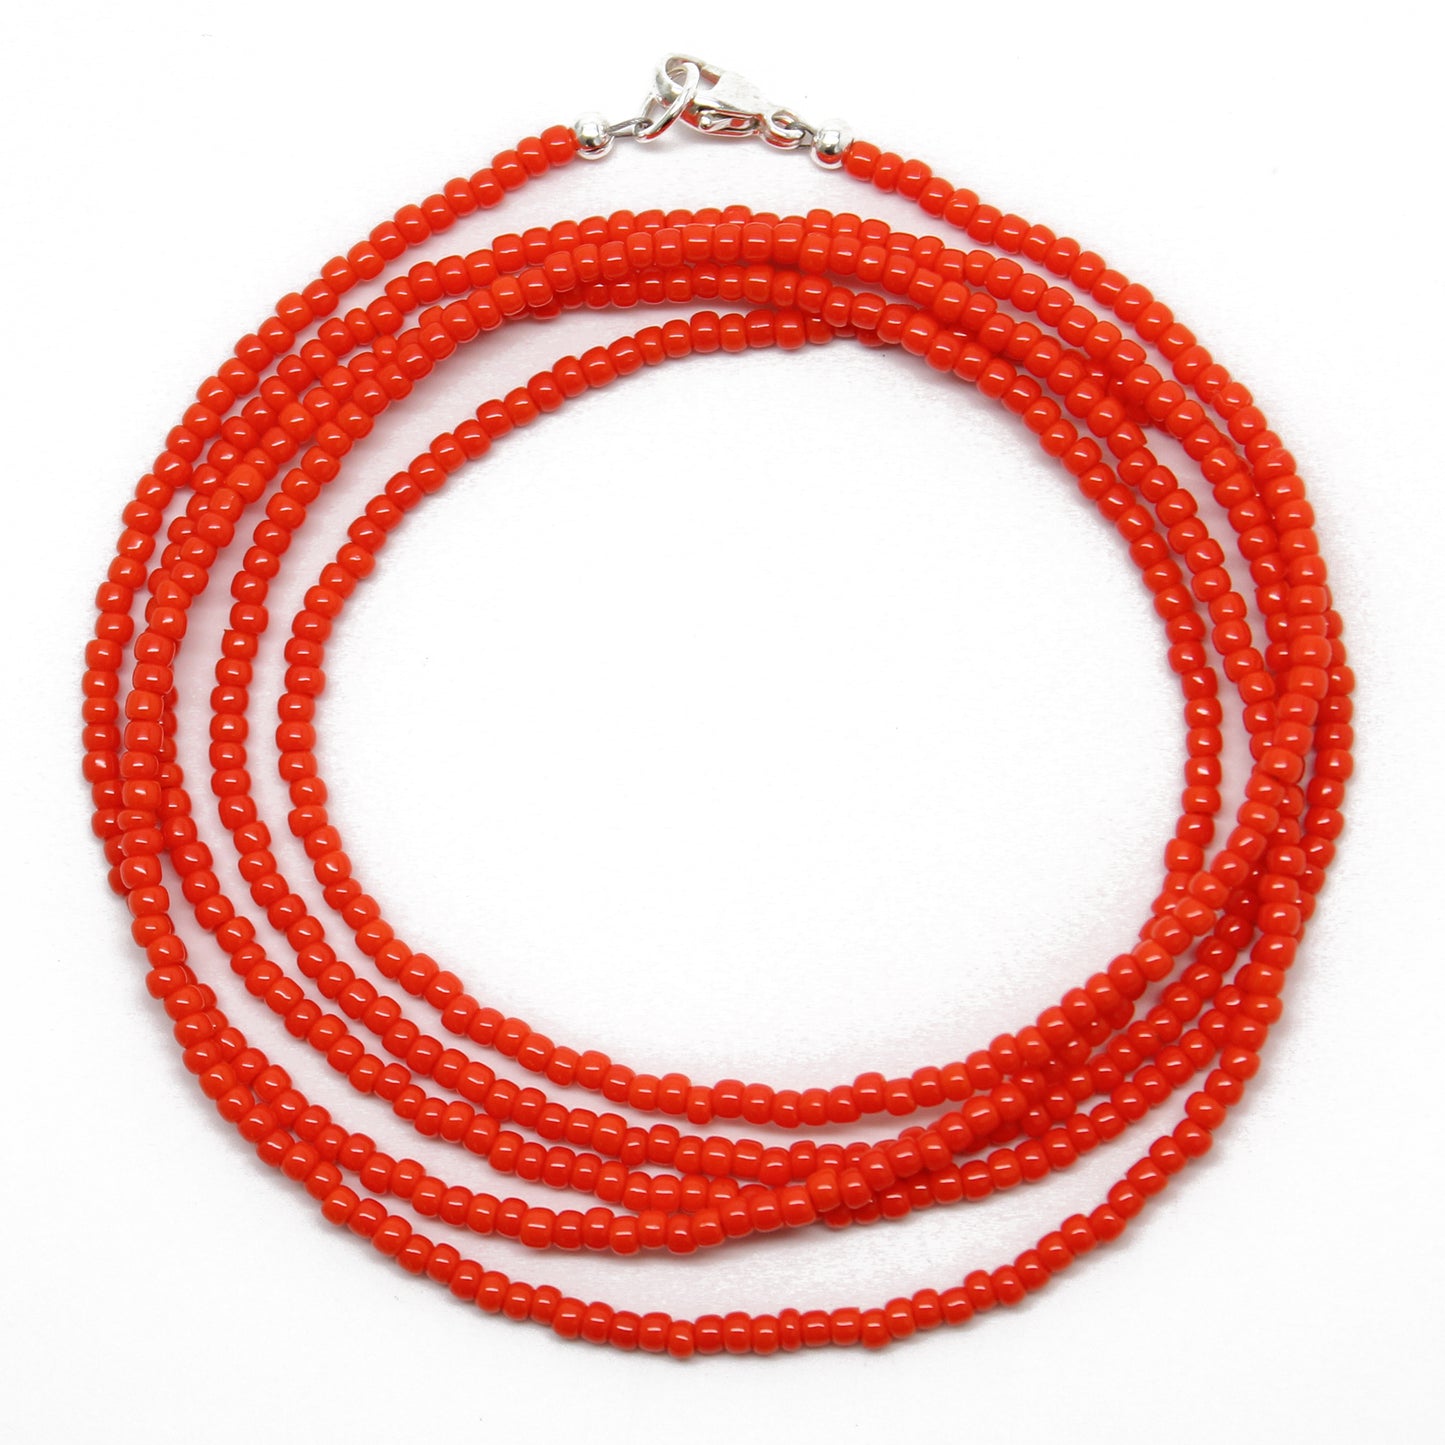 Sunset Orange Seed Bead Necklace, Thin 1.5mm Single Strand